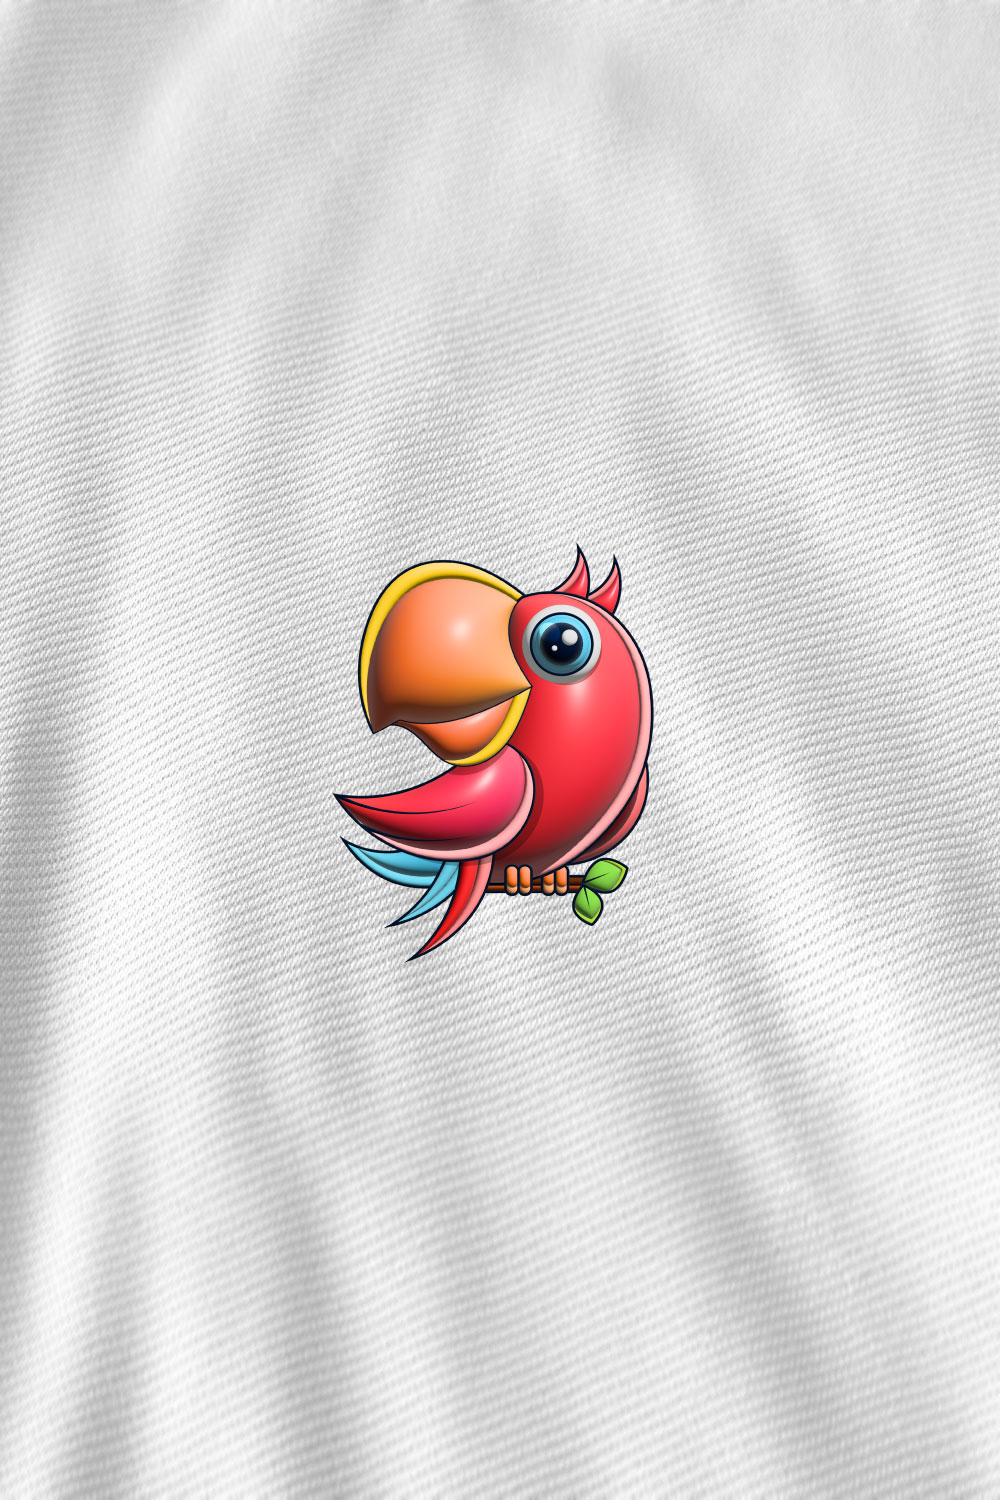 Parrot Logo Design pinterest image.